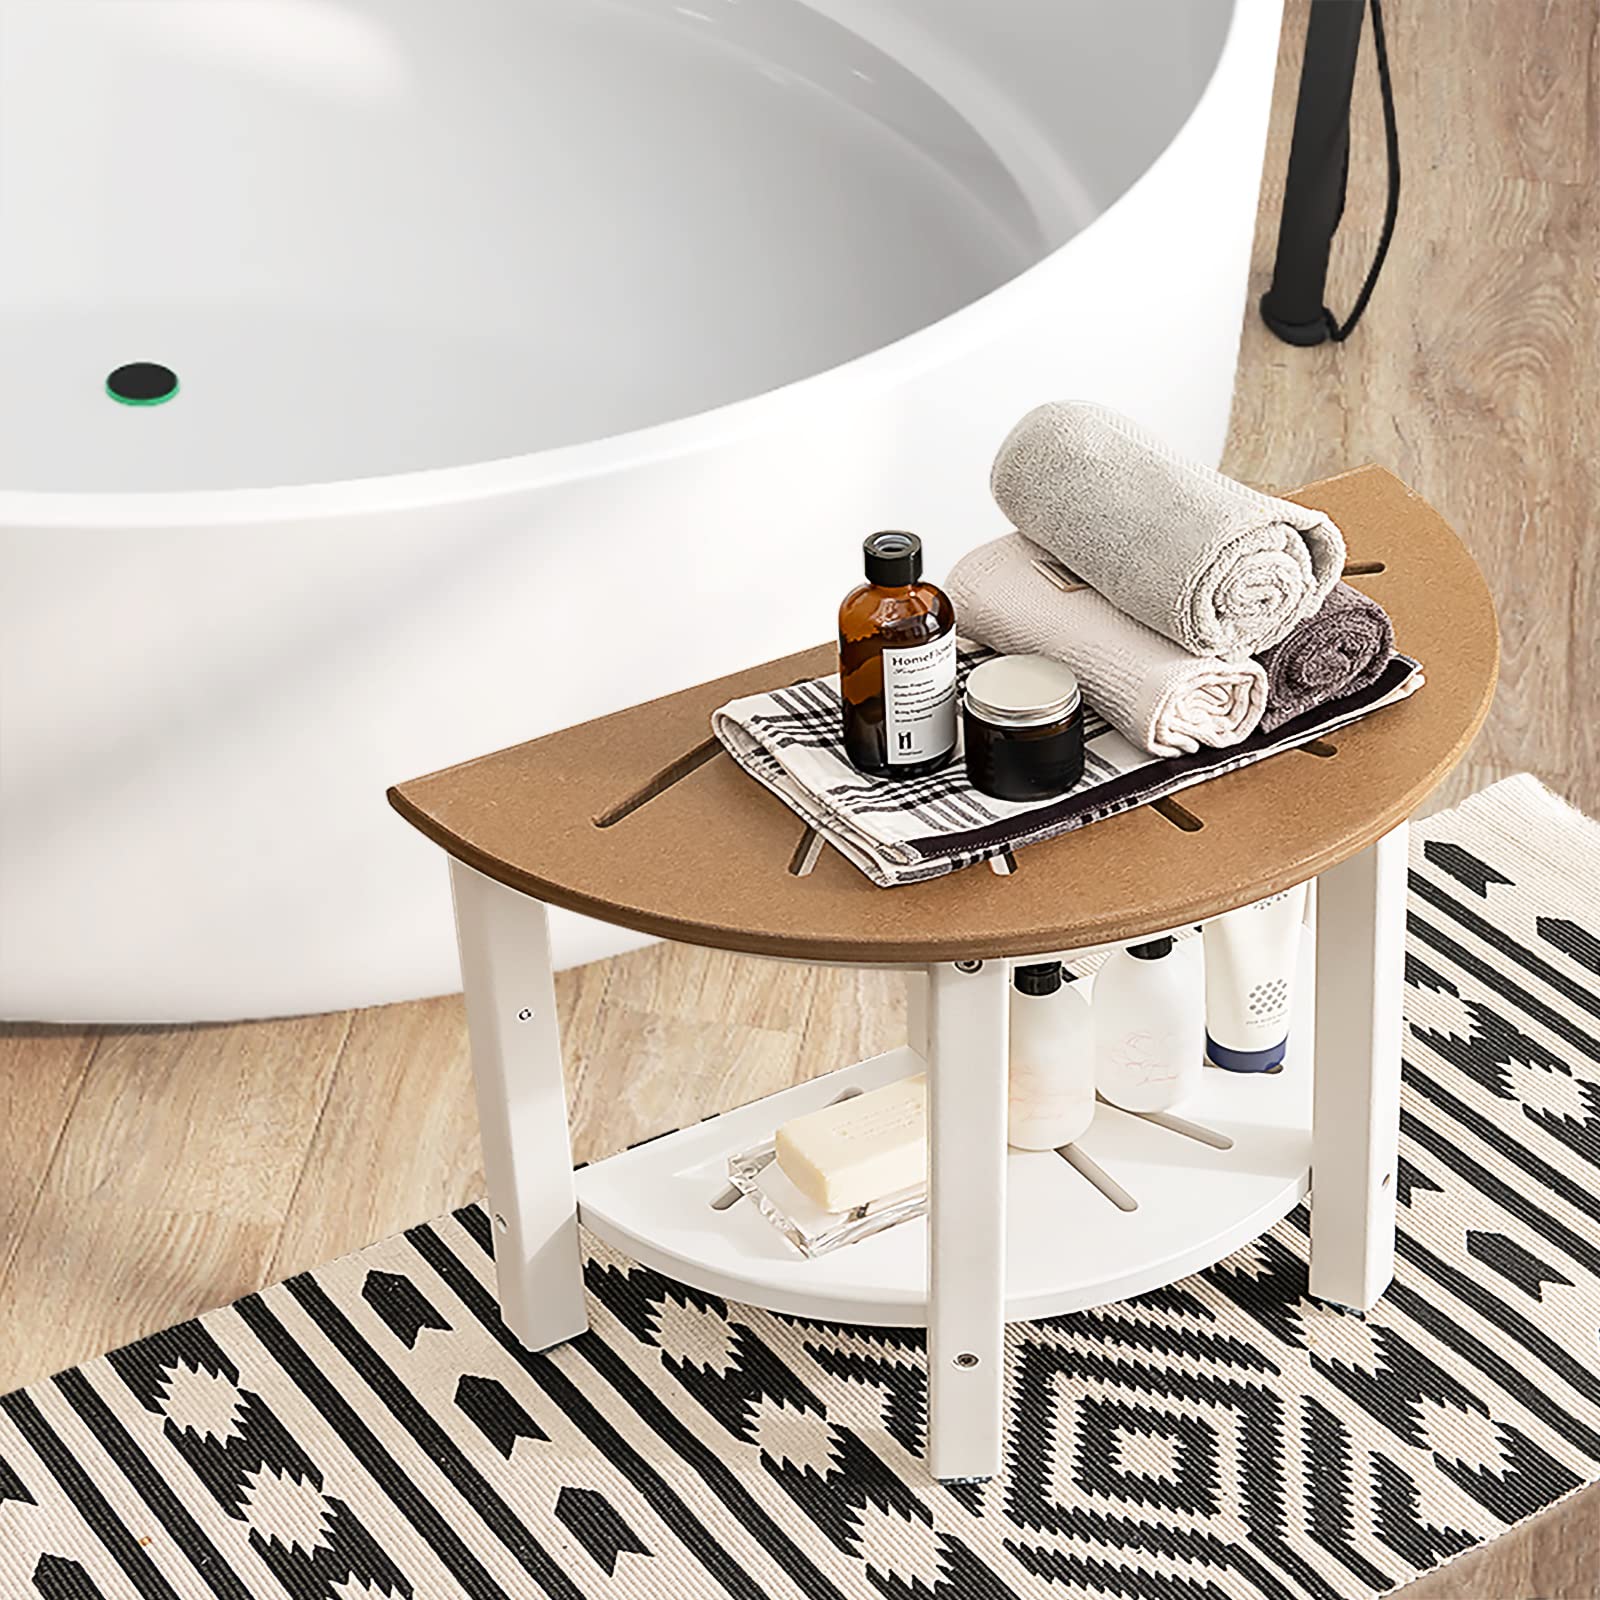 Giantex Shower Stool Waterproof HDPE - Bath Spa Seat for Shaving Legs, Storage Shelf, Non-Slip Feet